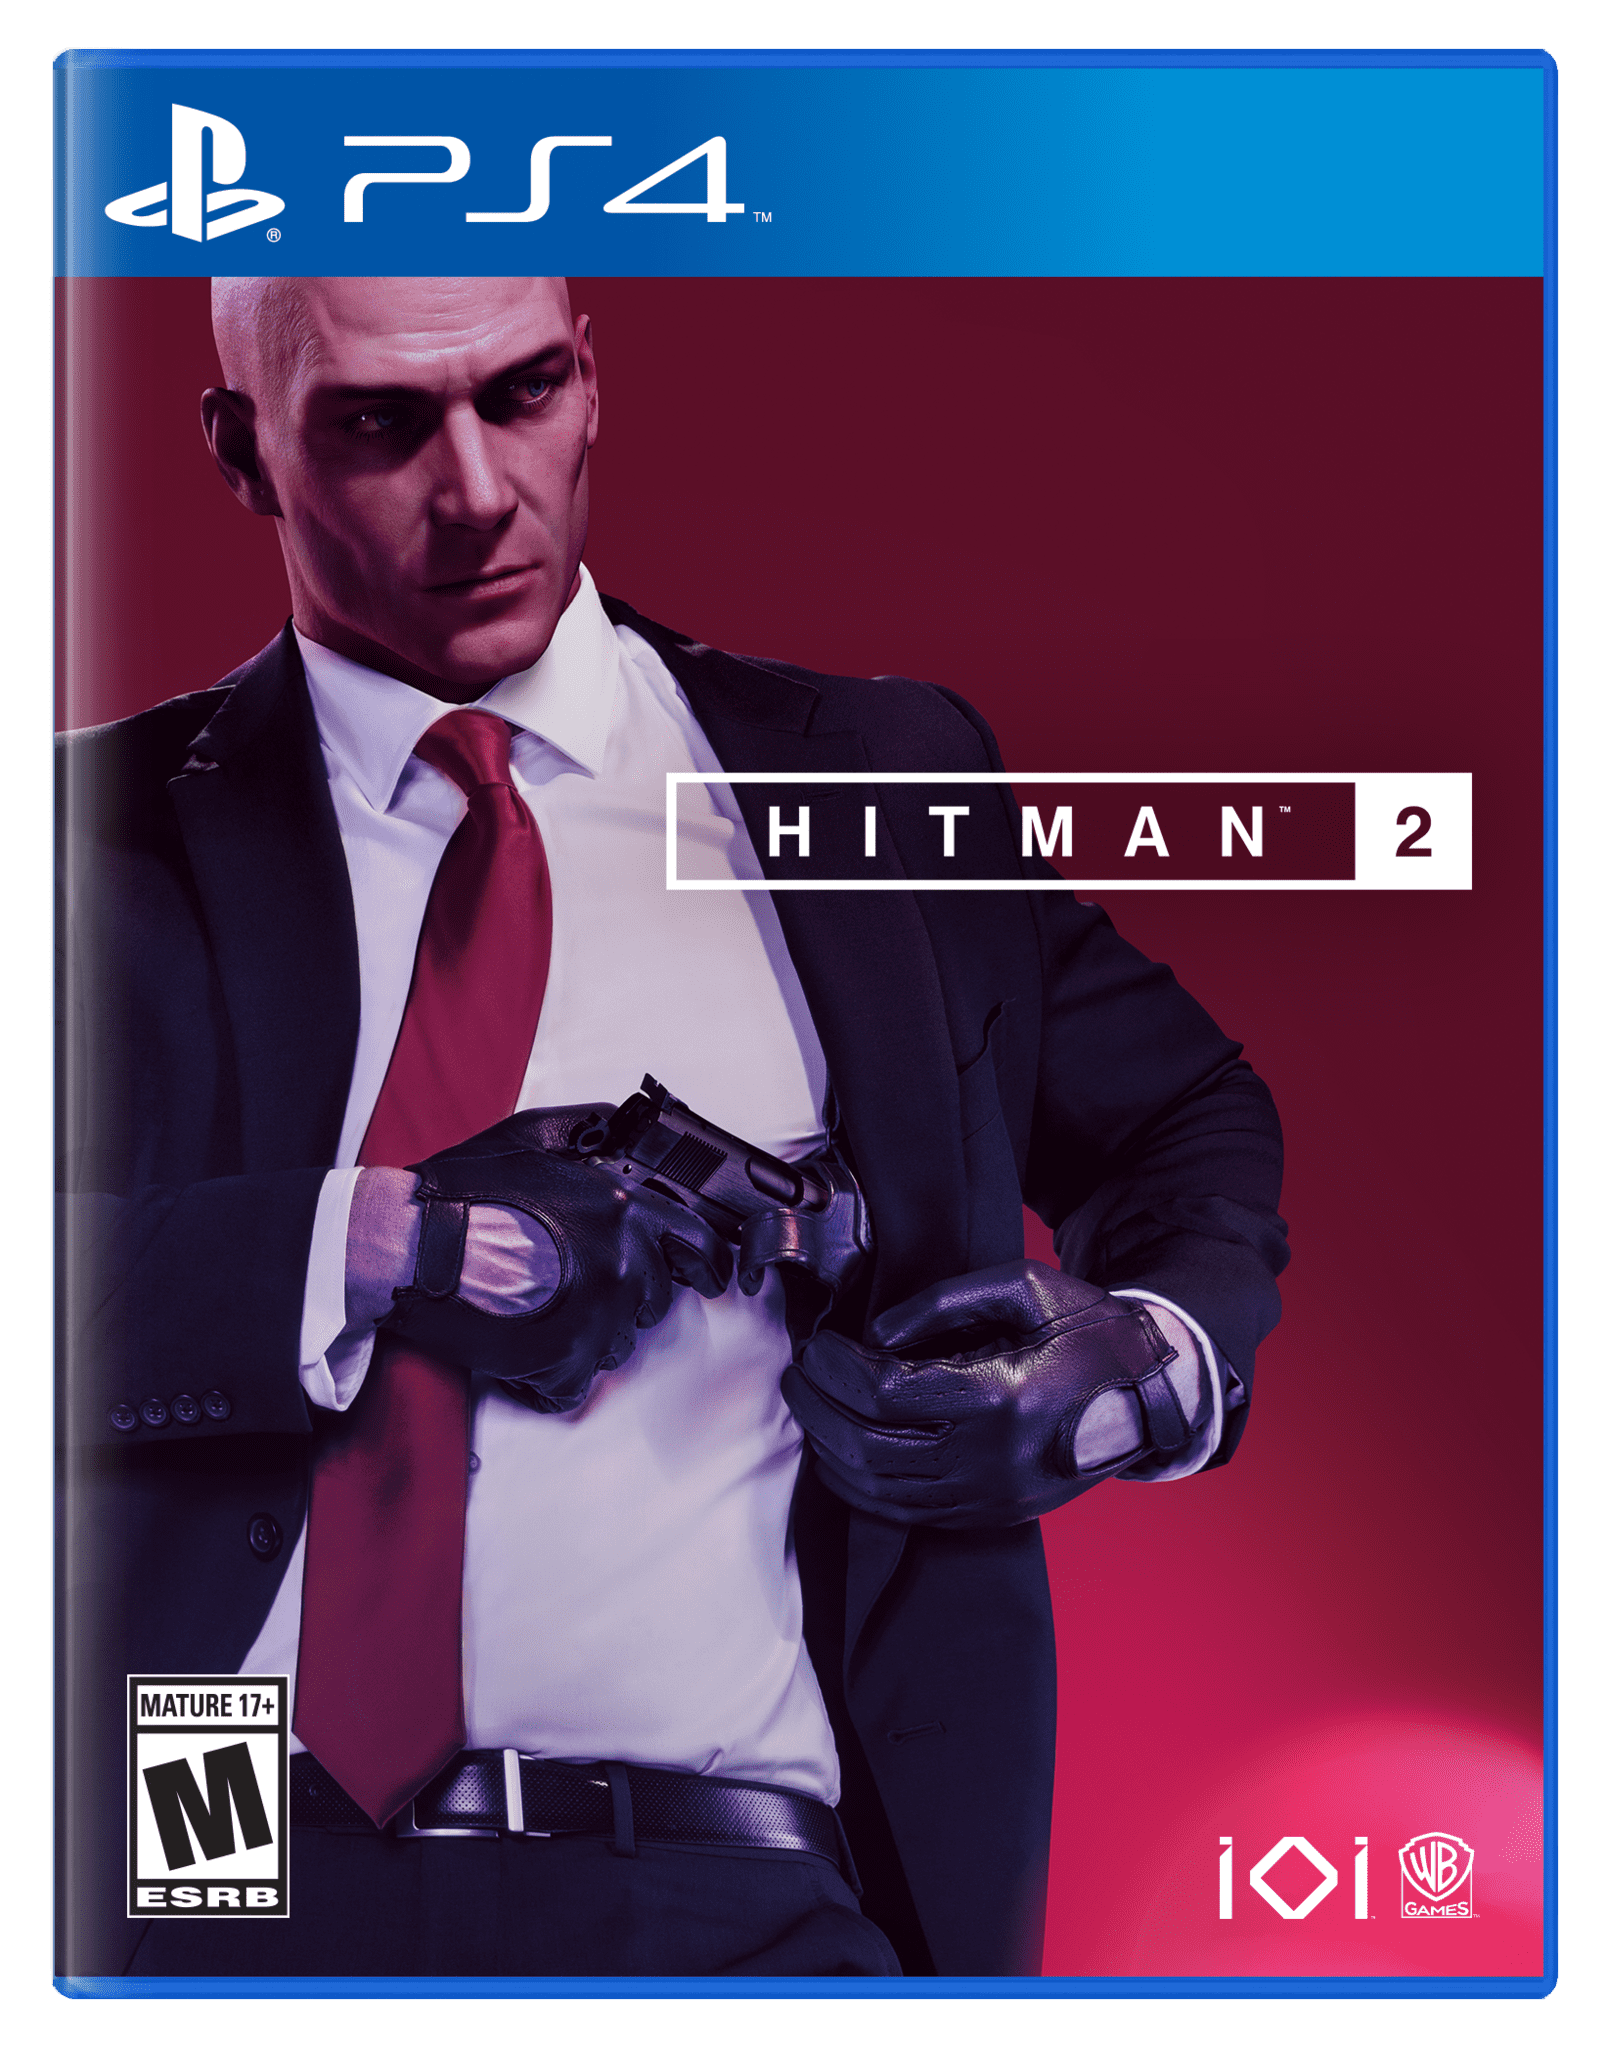 Hitman 3 (PS5) cheap - Price of $16.71